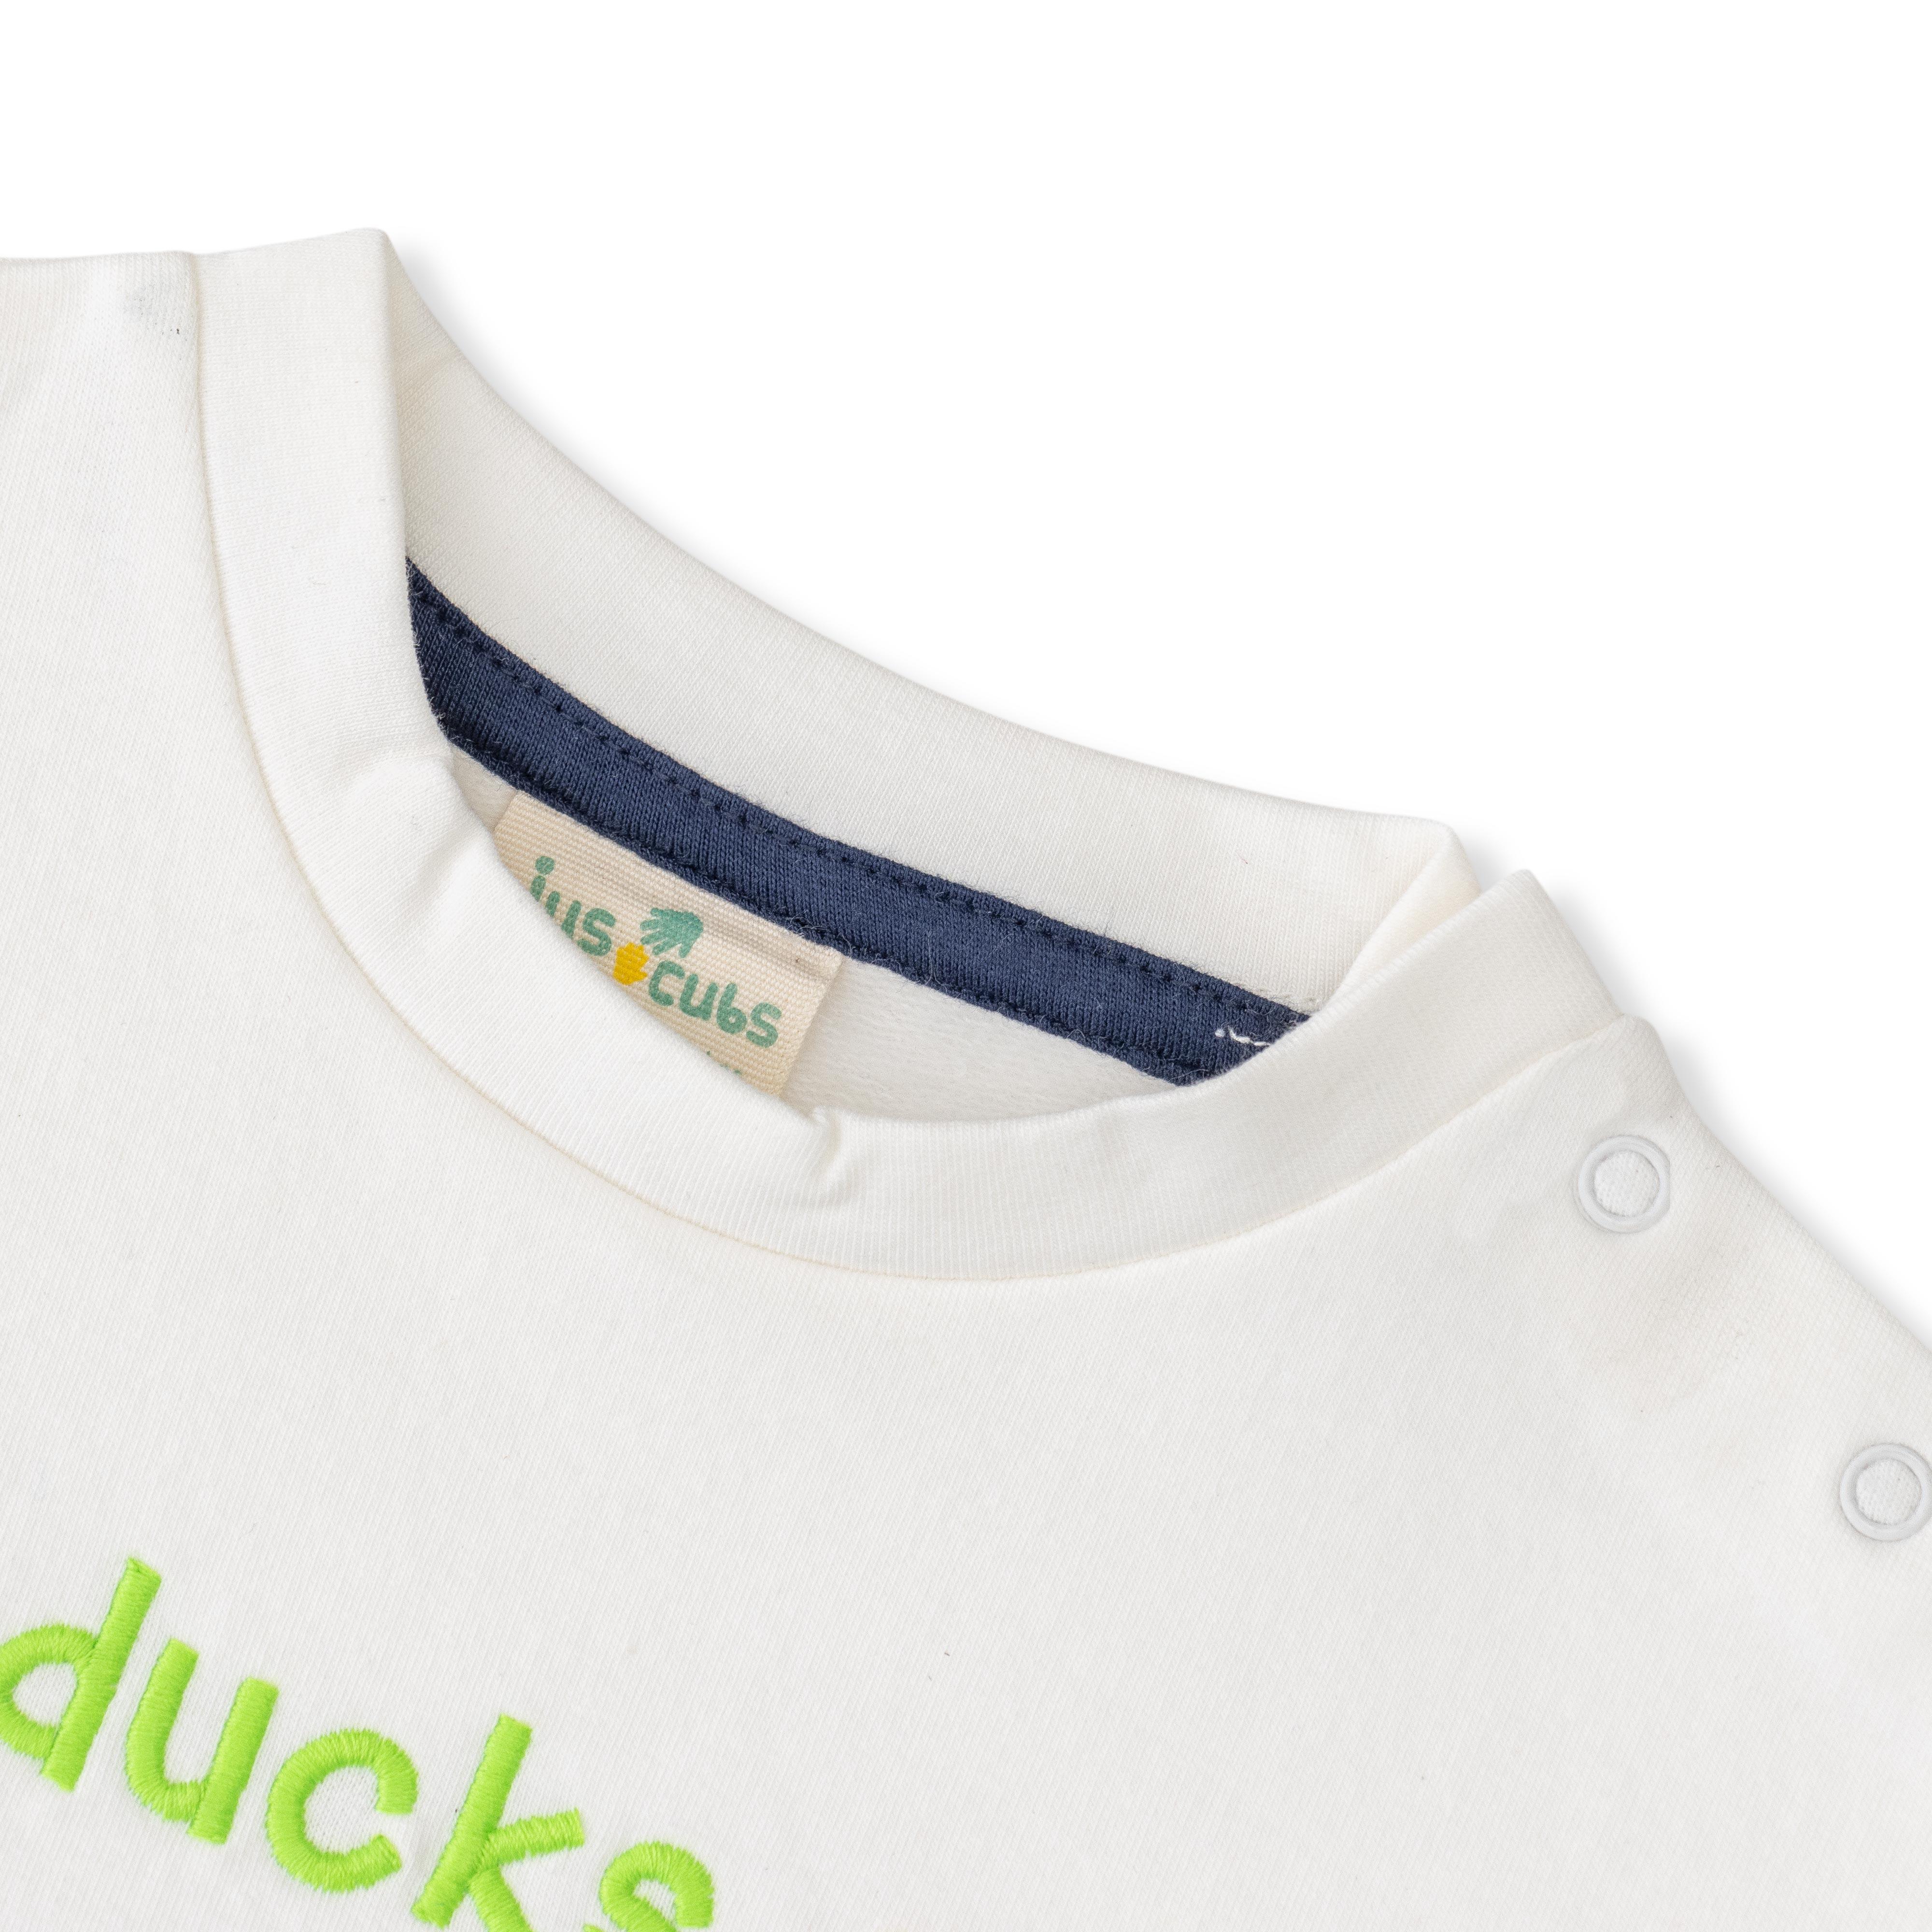 Baby Boys Full Sleeve Three Ducks One Day Printed Sweatshirt - Juscubs